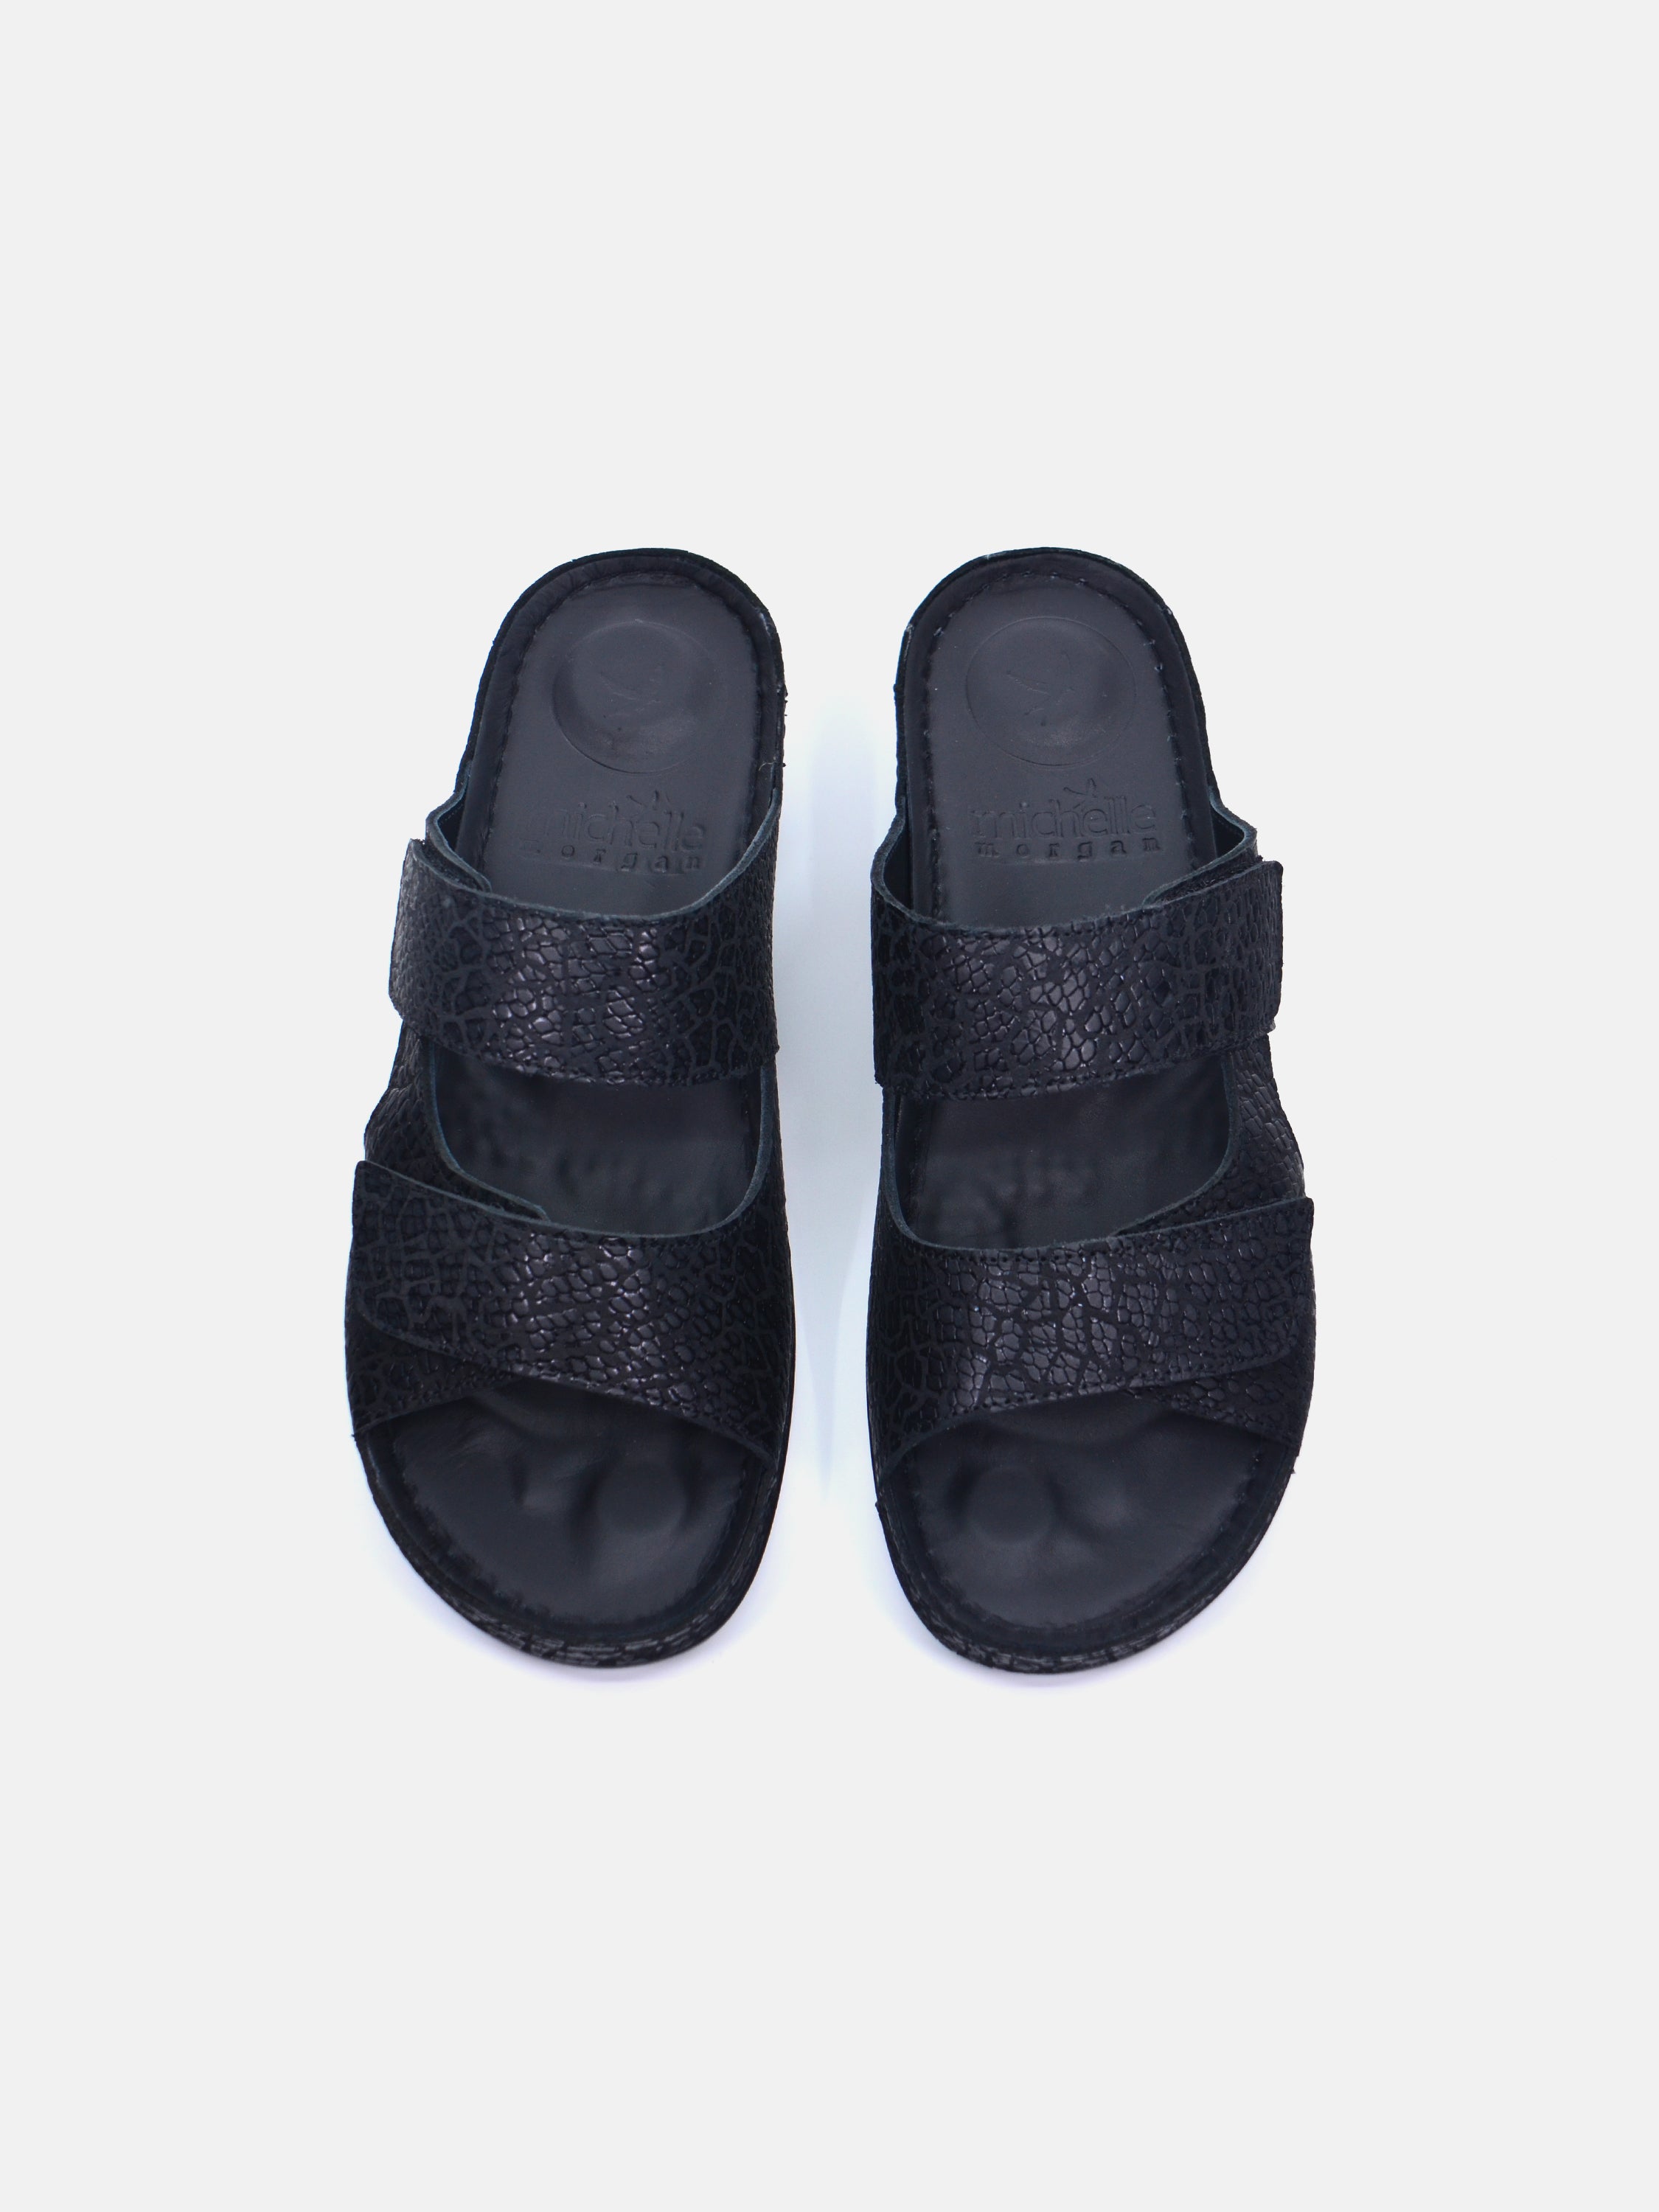 Michelle Morgan MM-101 Women's Slider Sandals #color_Black